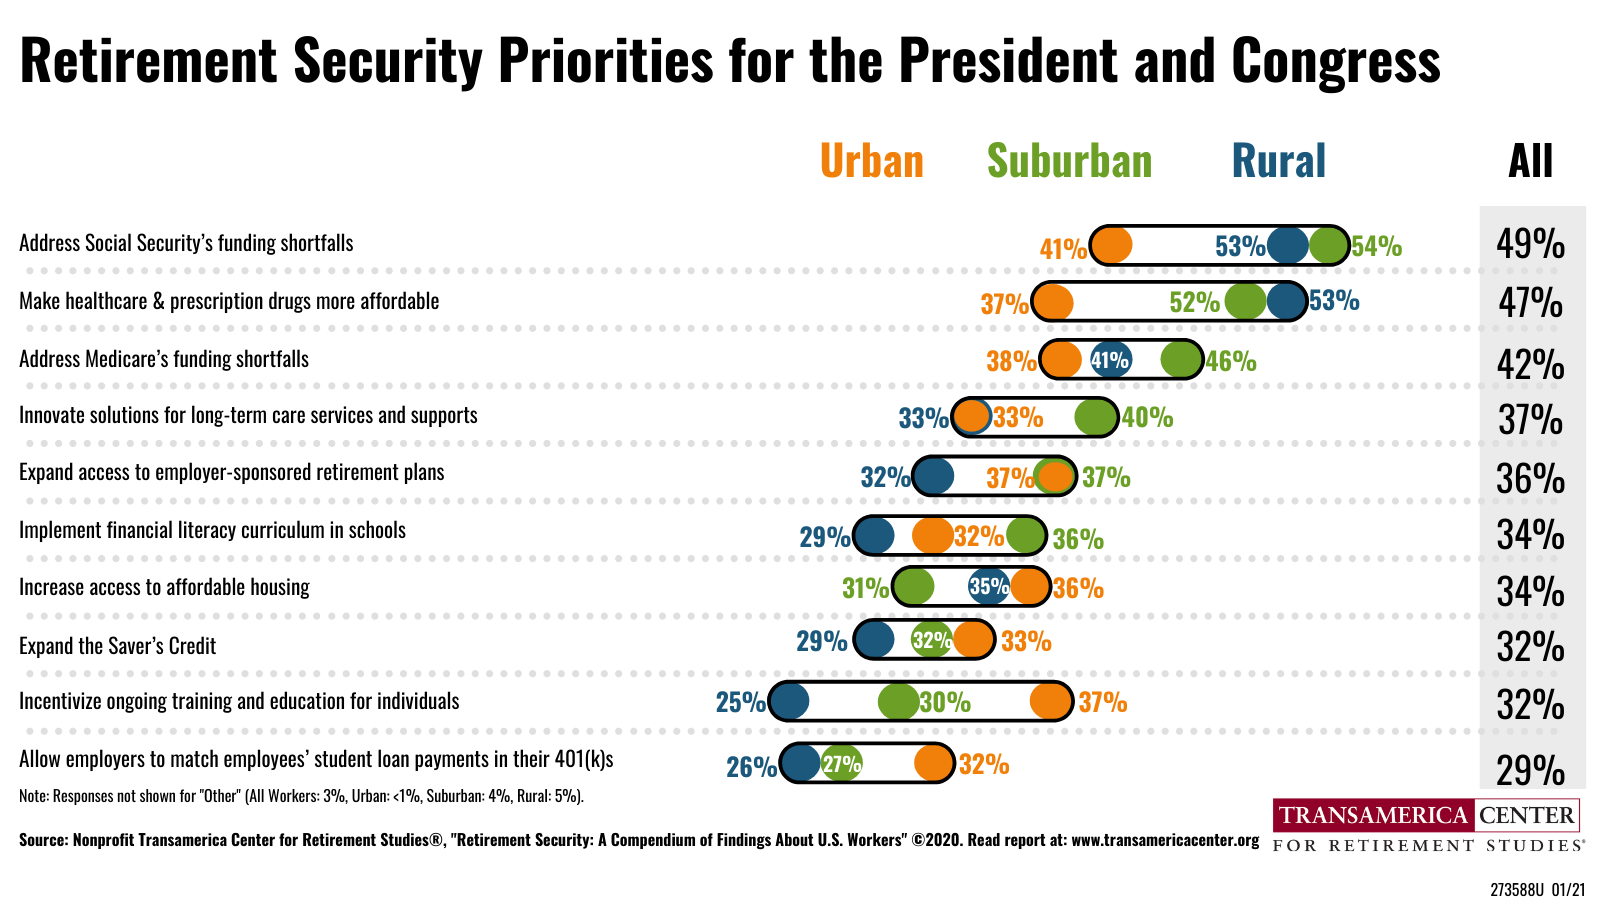 Urbanicity Retirement Security Priorities | TCRS 20th Annual Retirement Survey